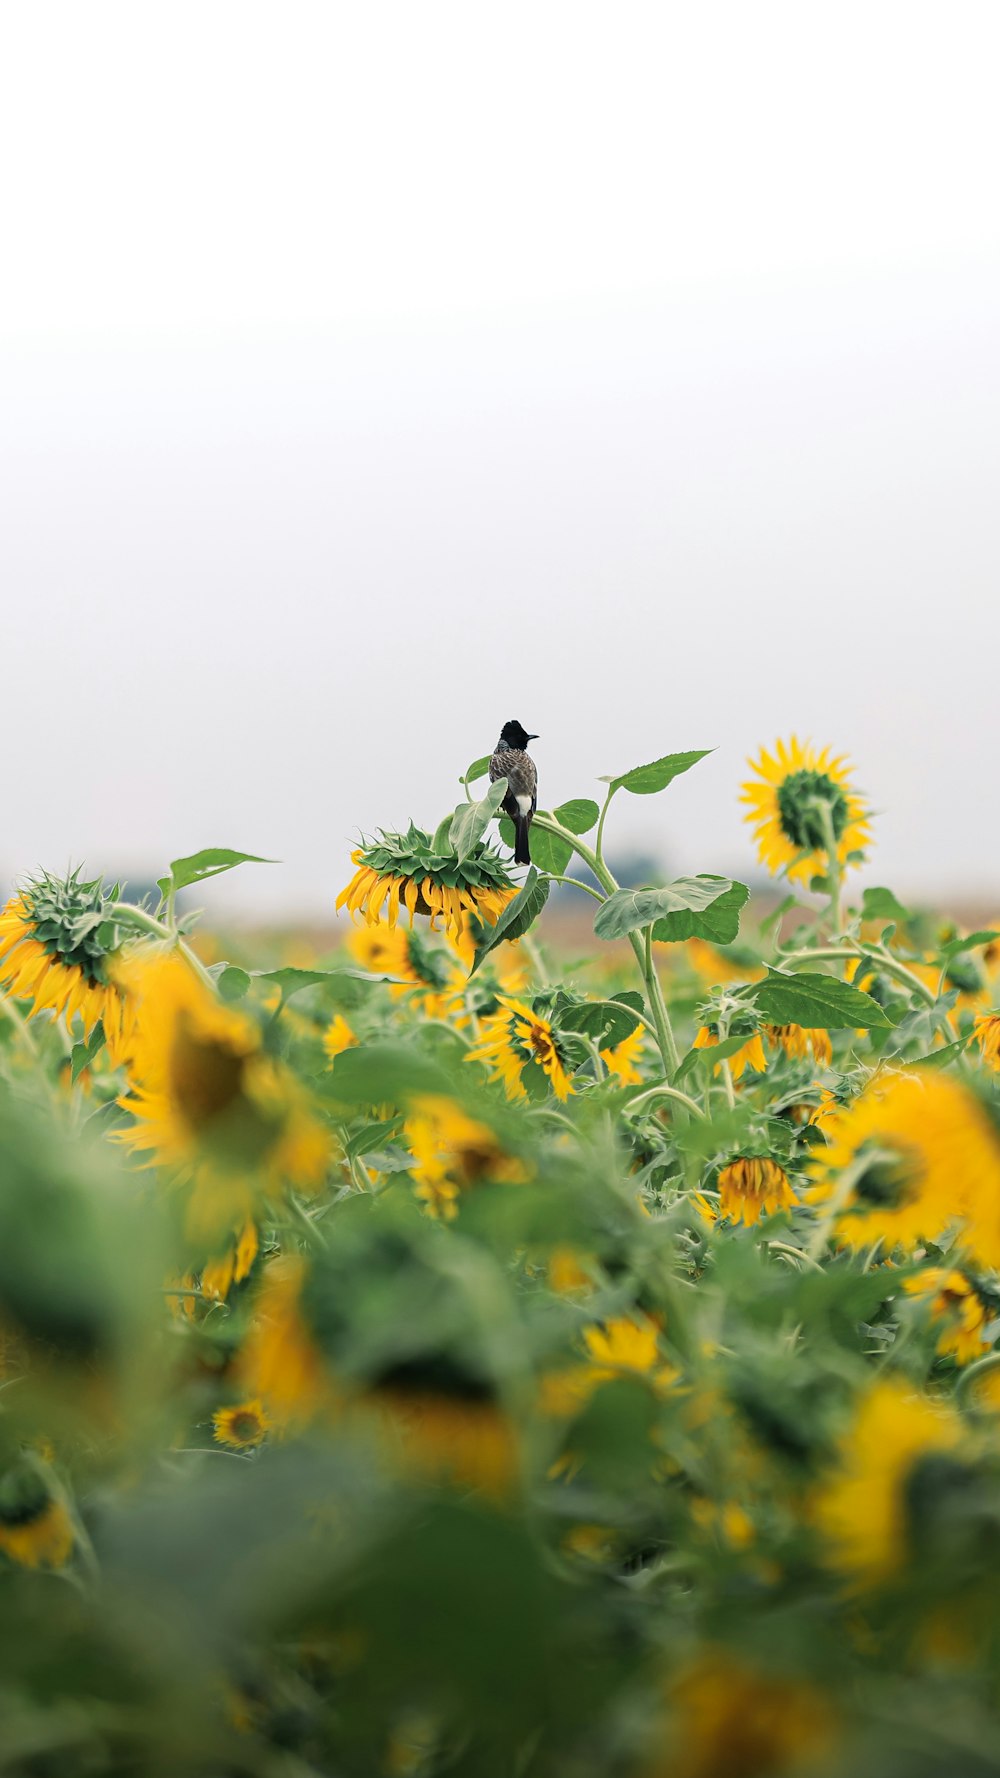 a bird sitting on a sunflower in a field